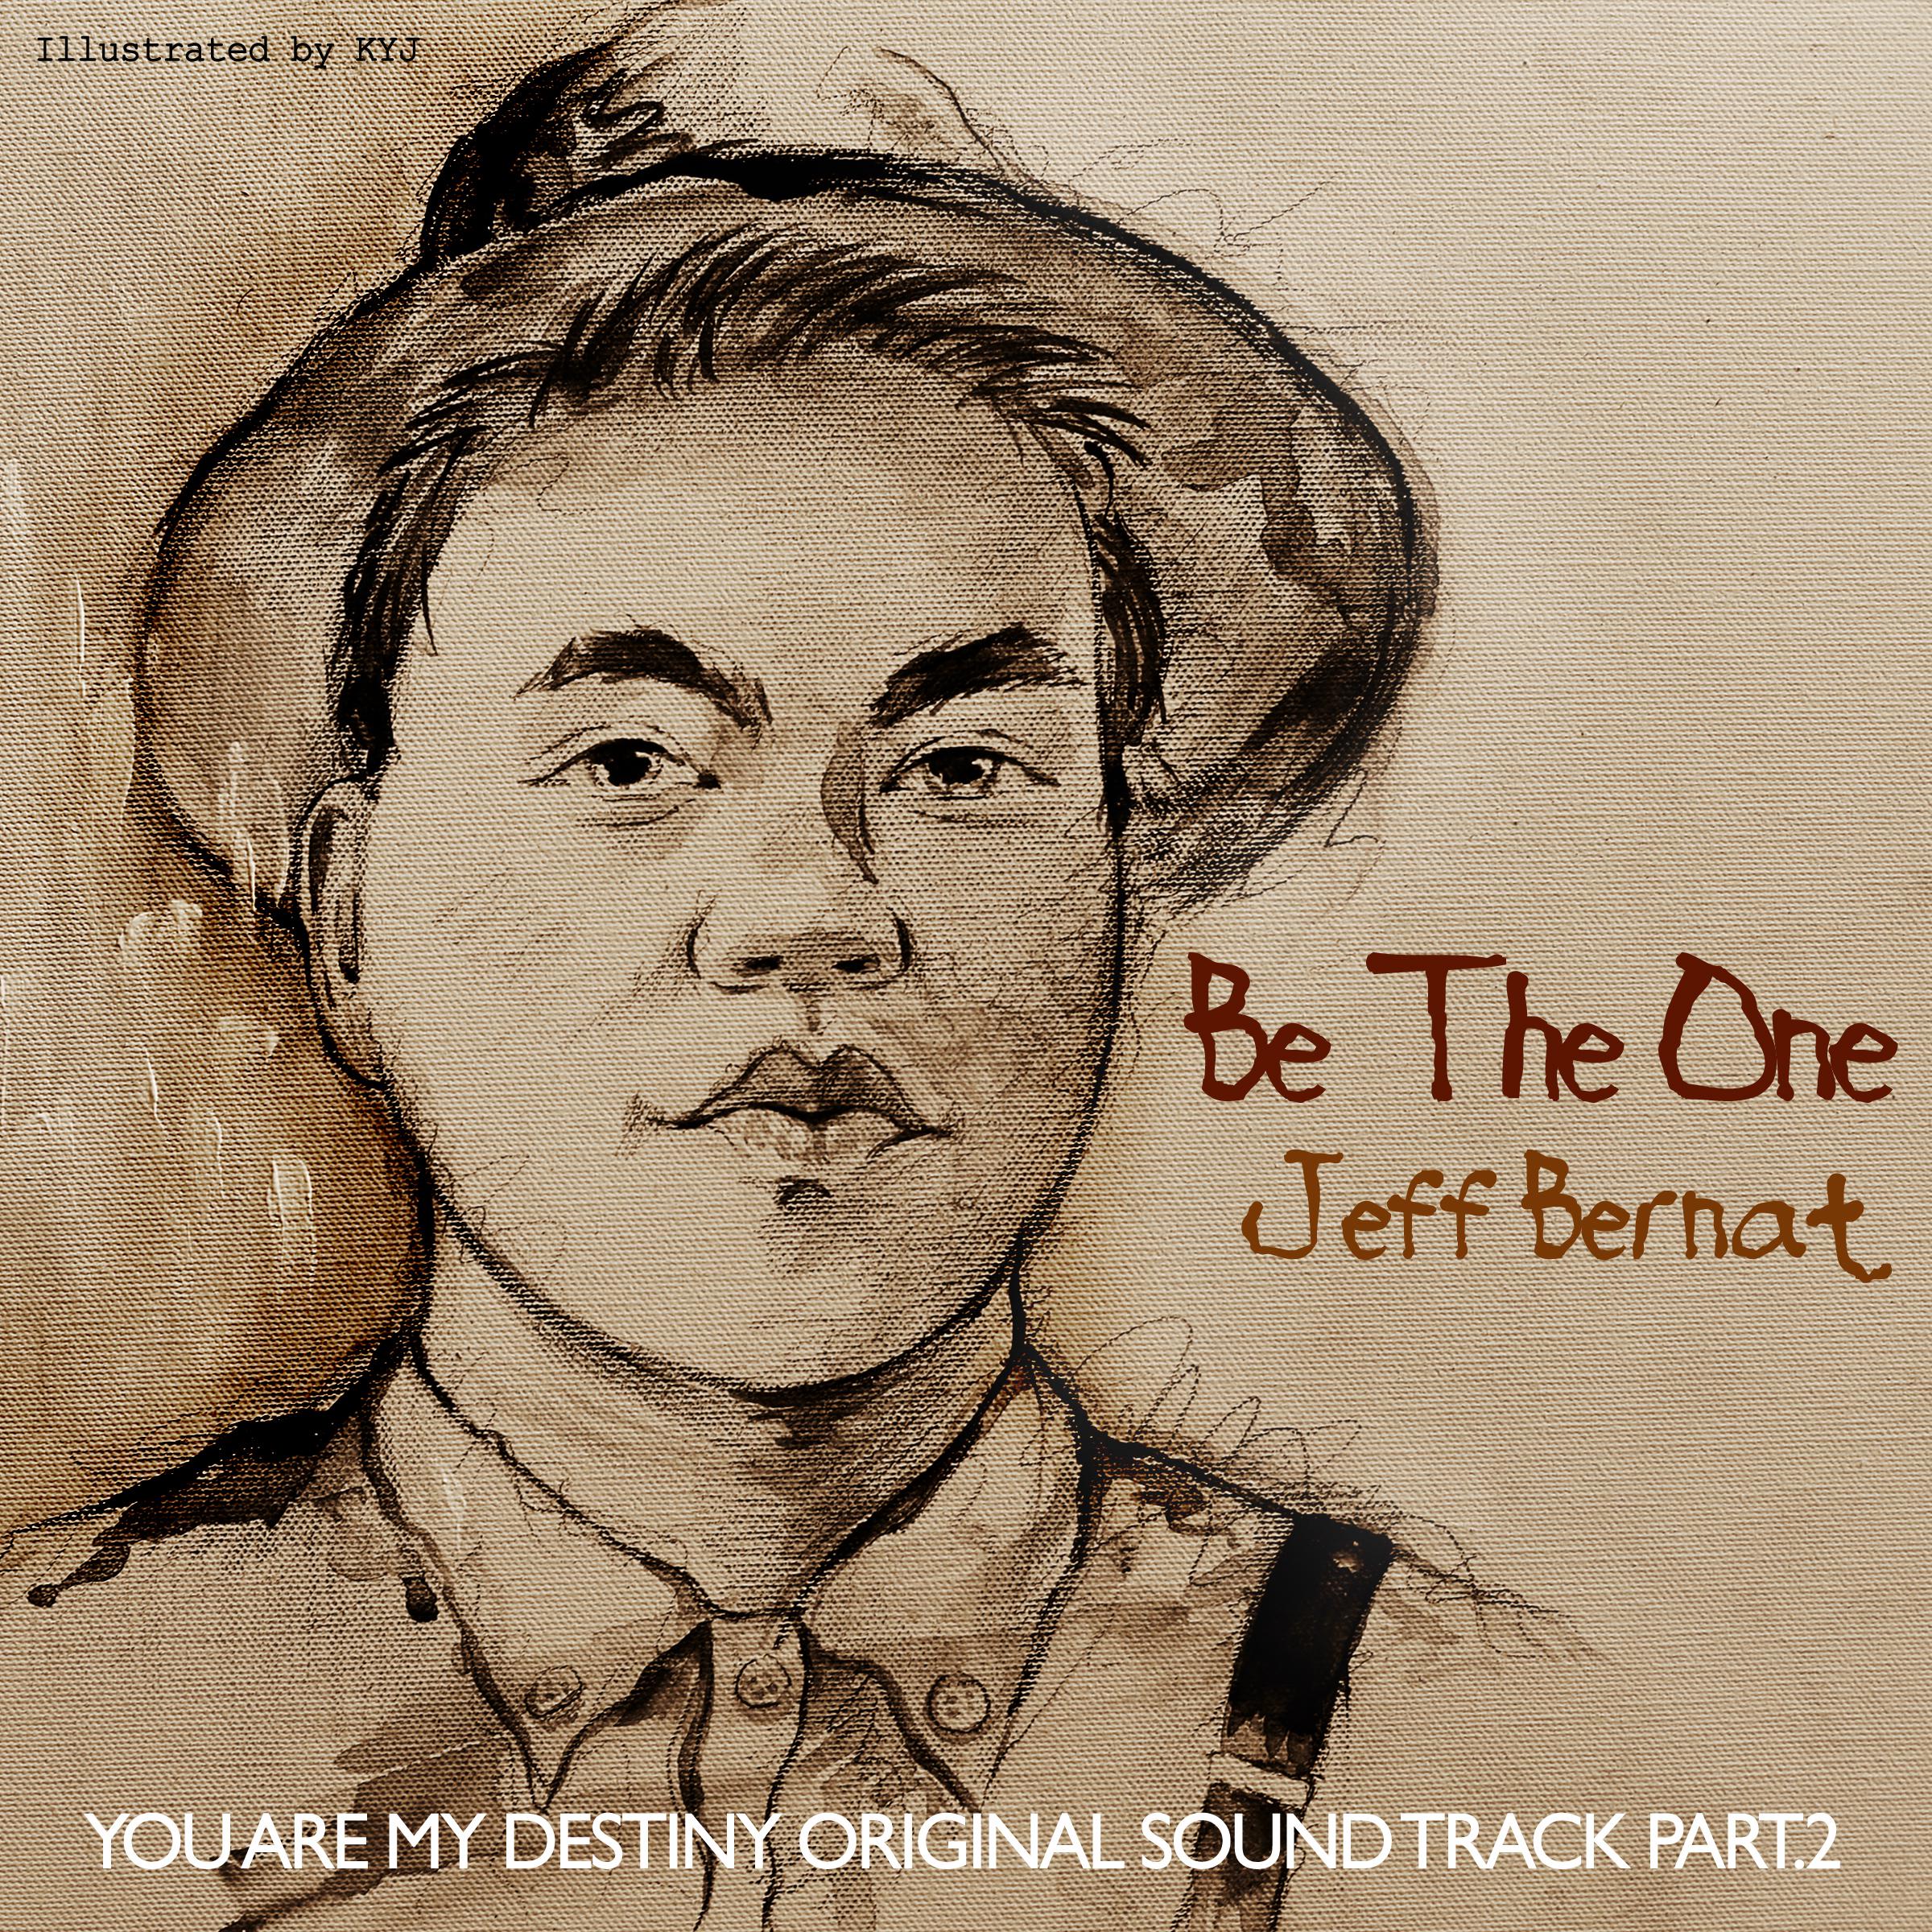 Jeff Bernat - Be The One (Instrumental)